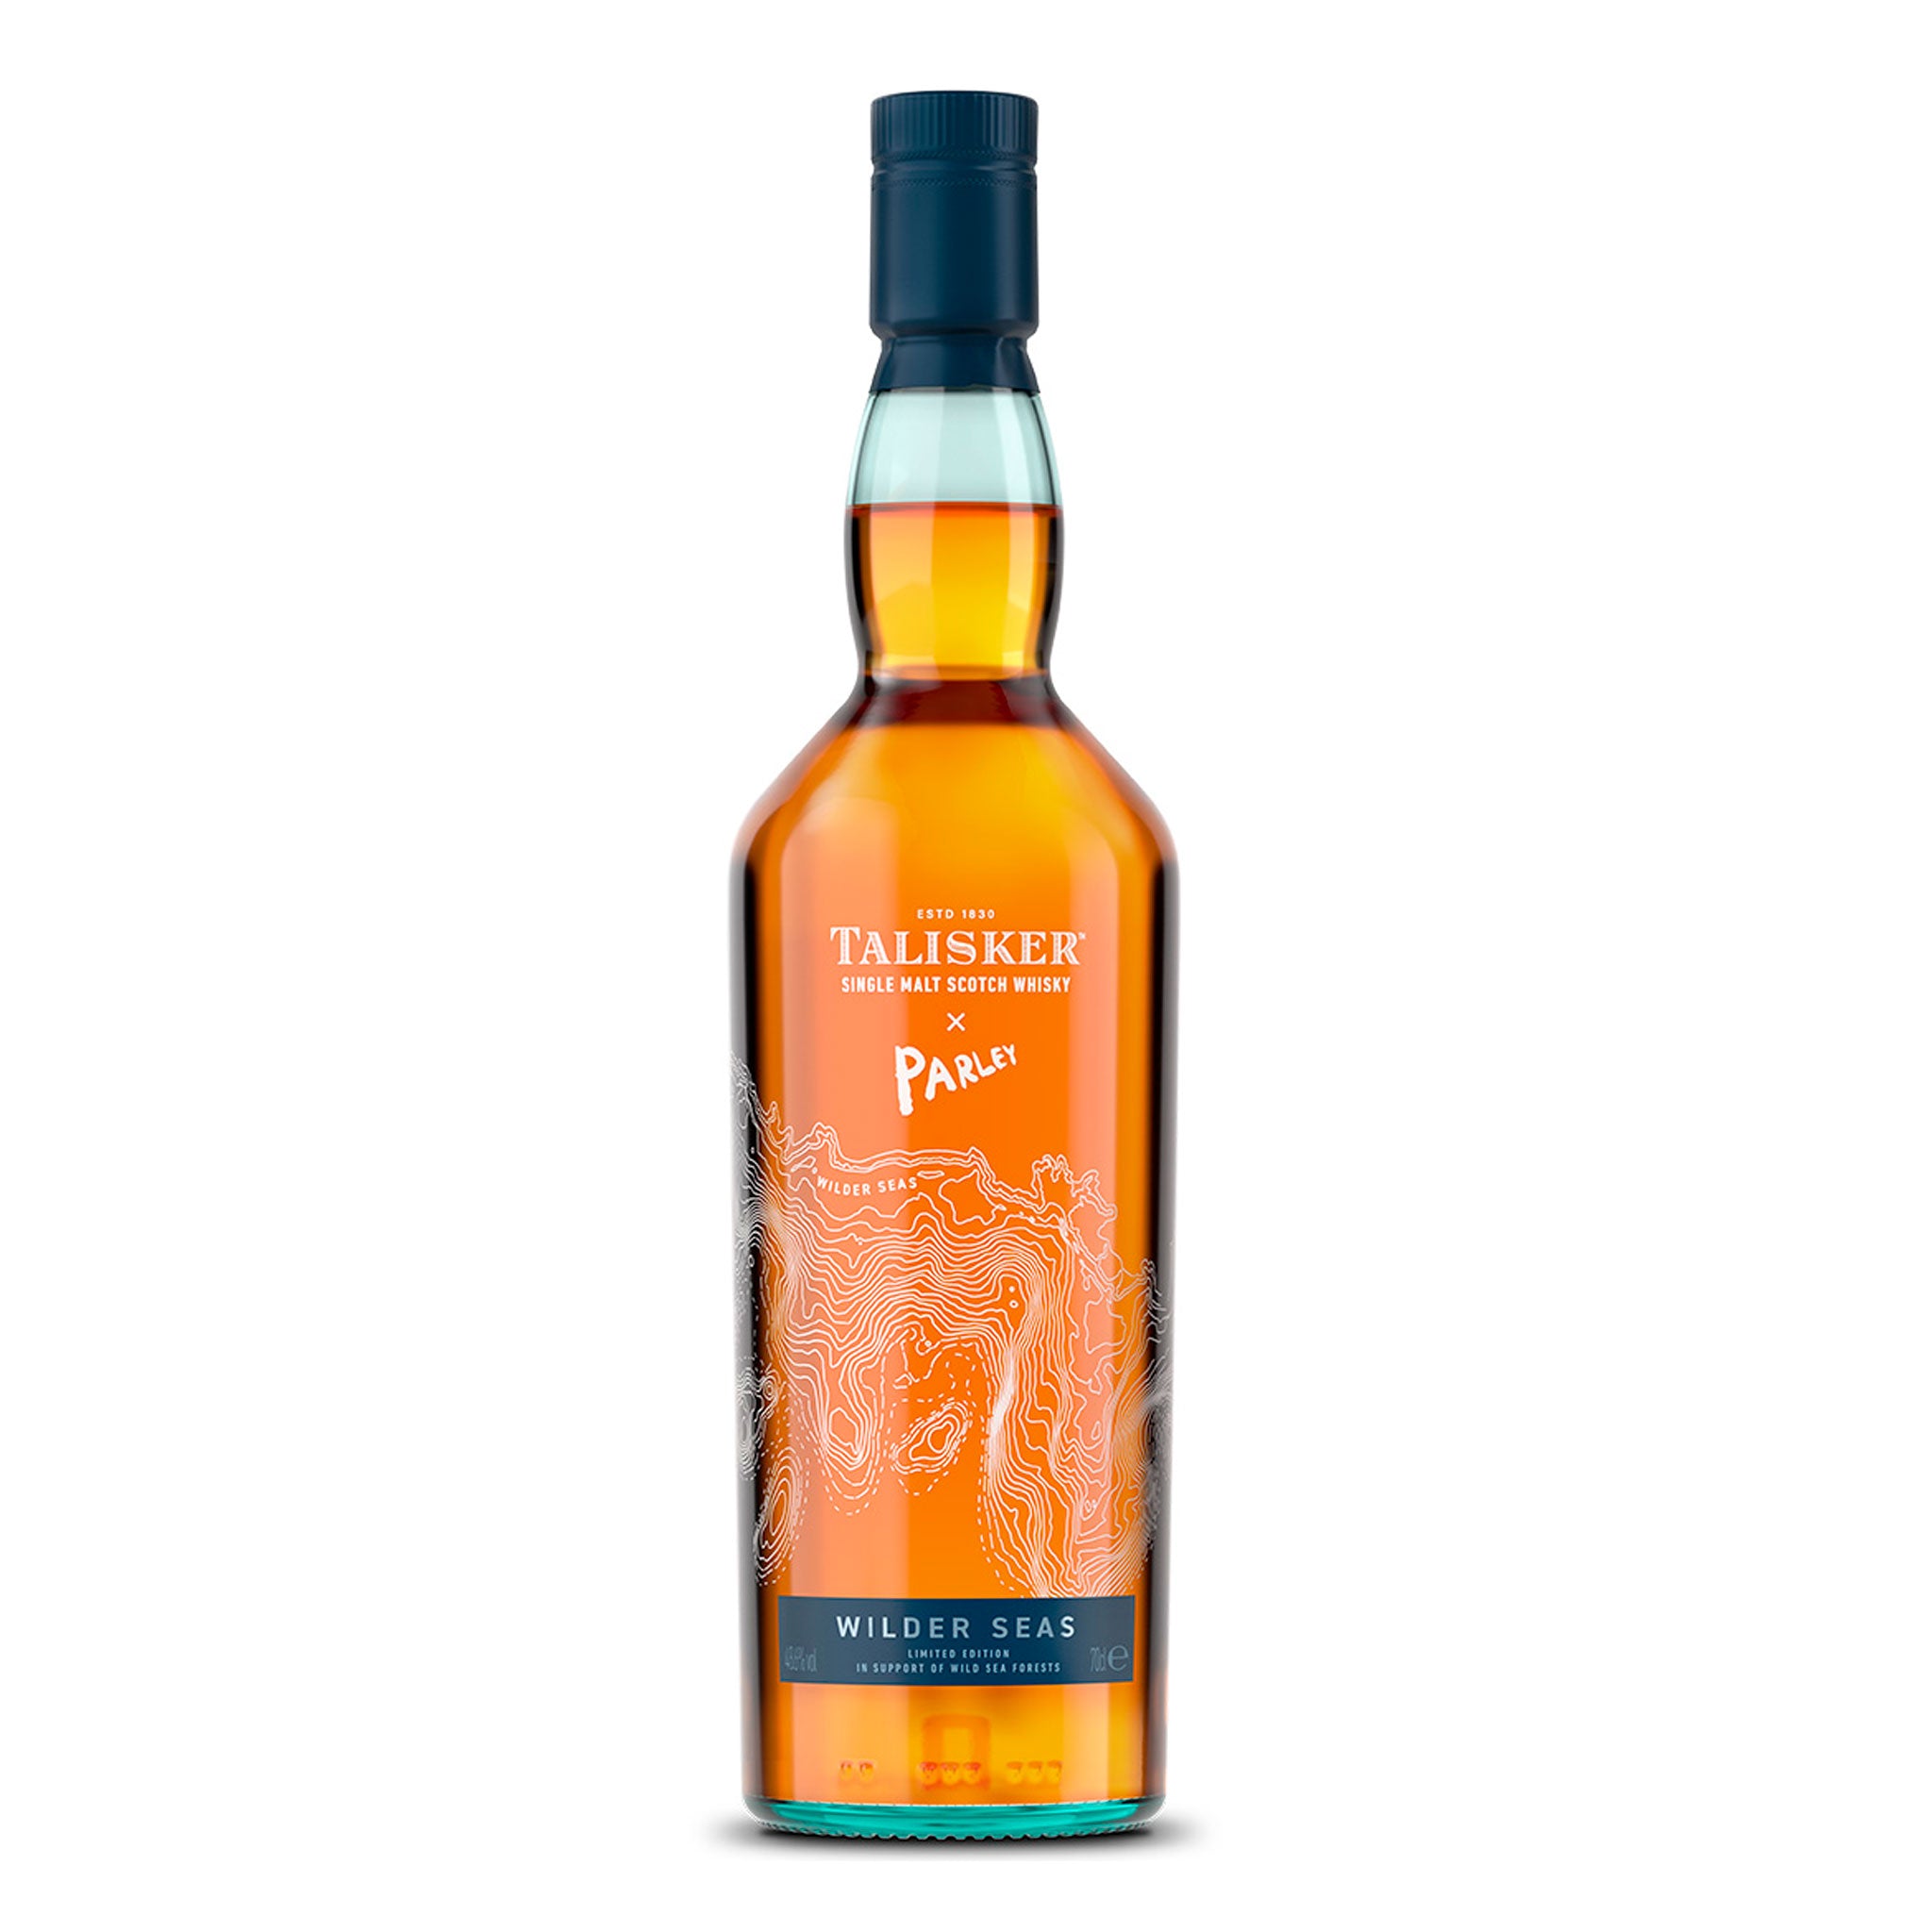 Talisker x Parley Wilder Seas Single Malt Scotch Whisky 700ml